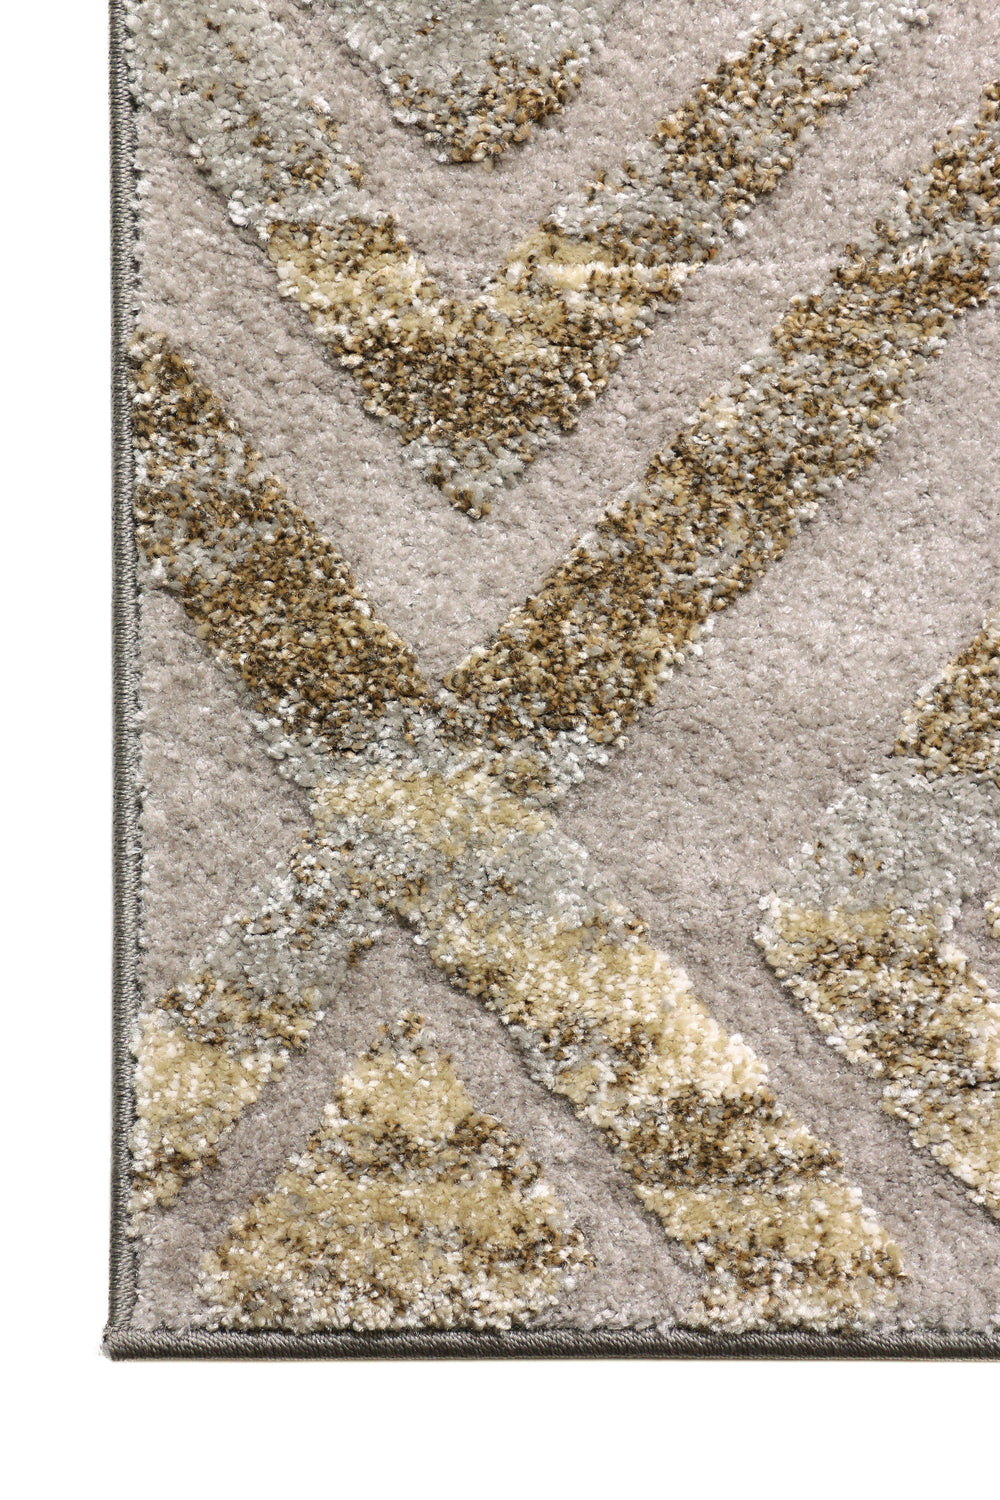 Allure 5 rug corner view diamond geometric beige grey cream